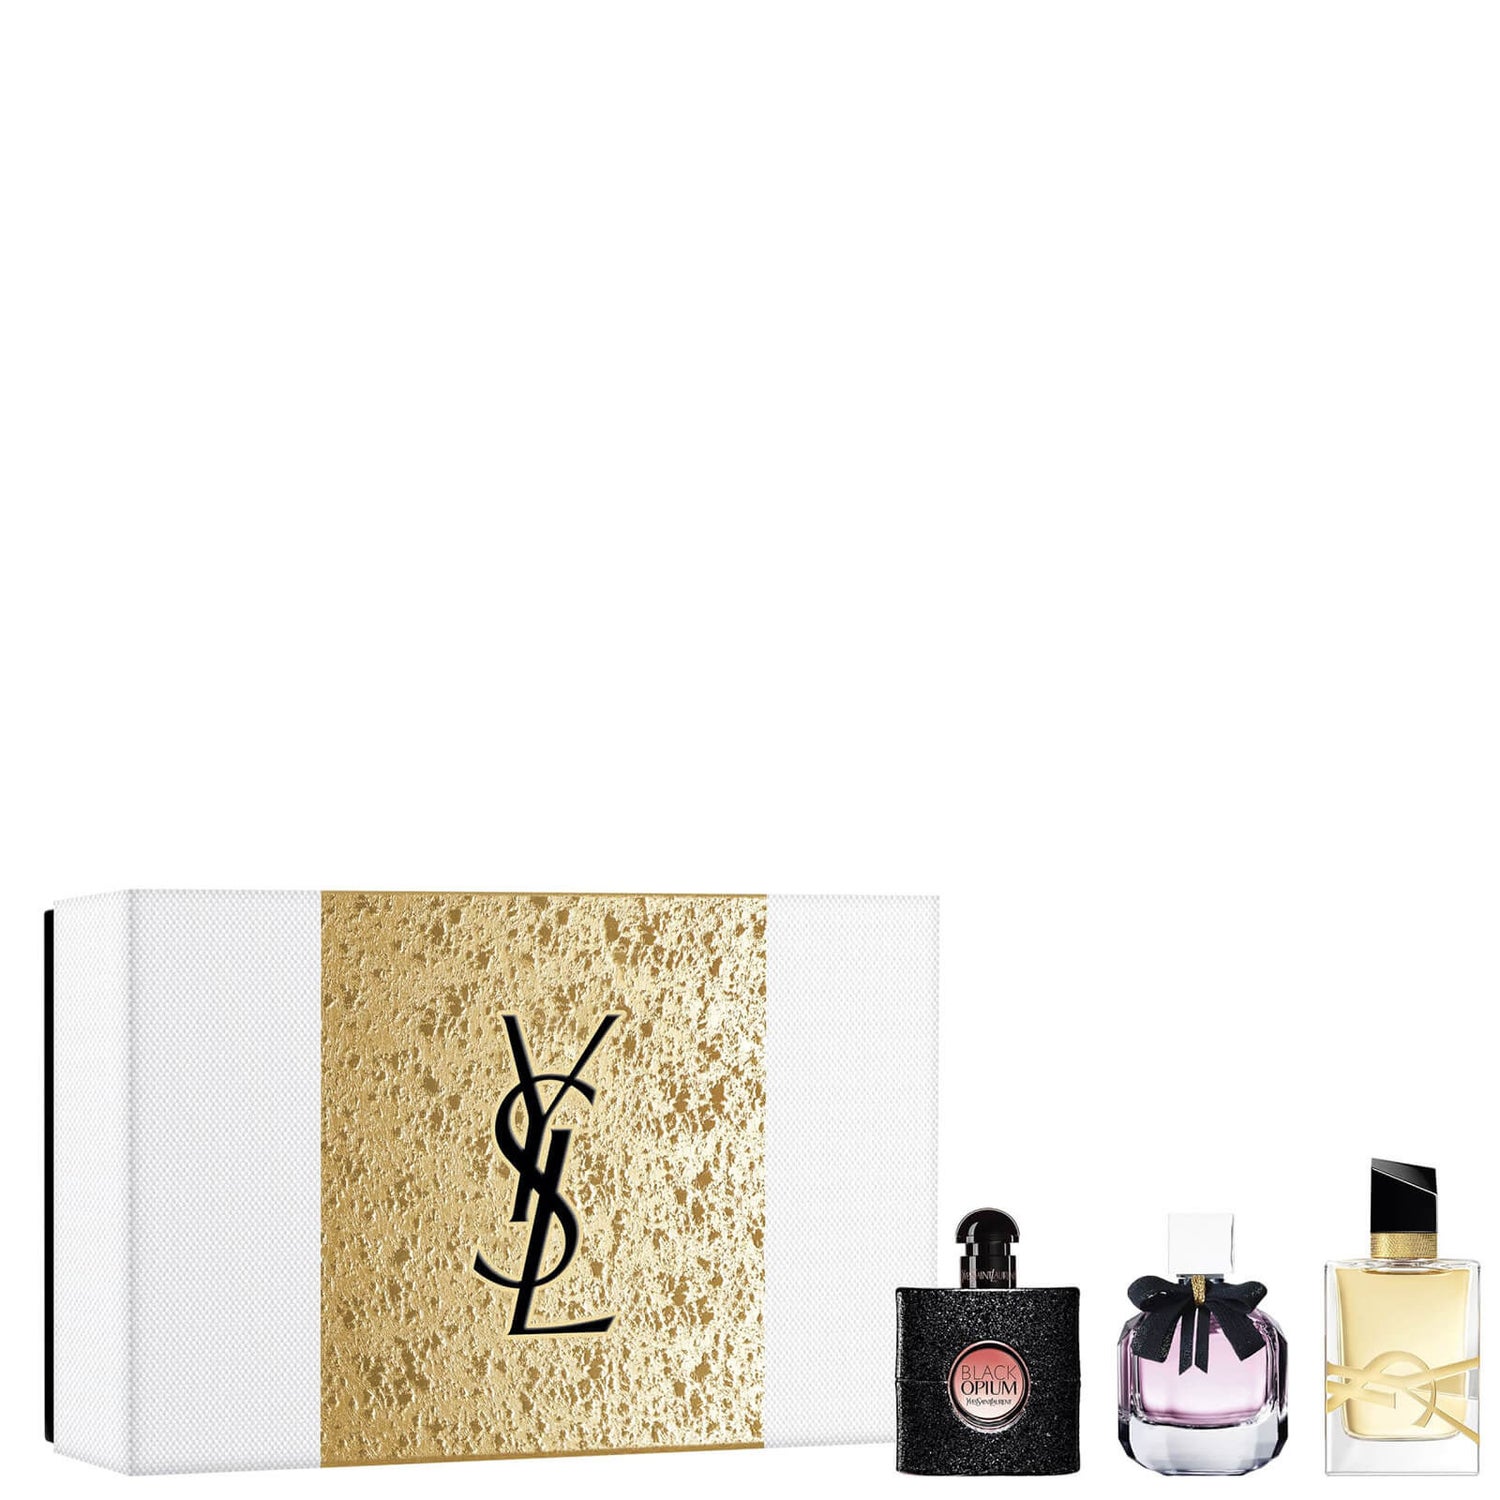 Yves Saint Laurent Zestaw upominkowy Ikony zapachu